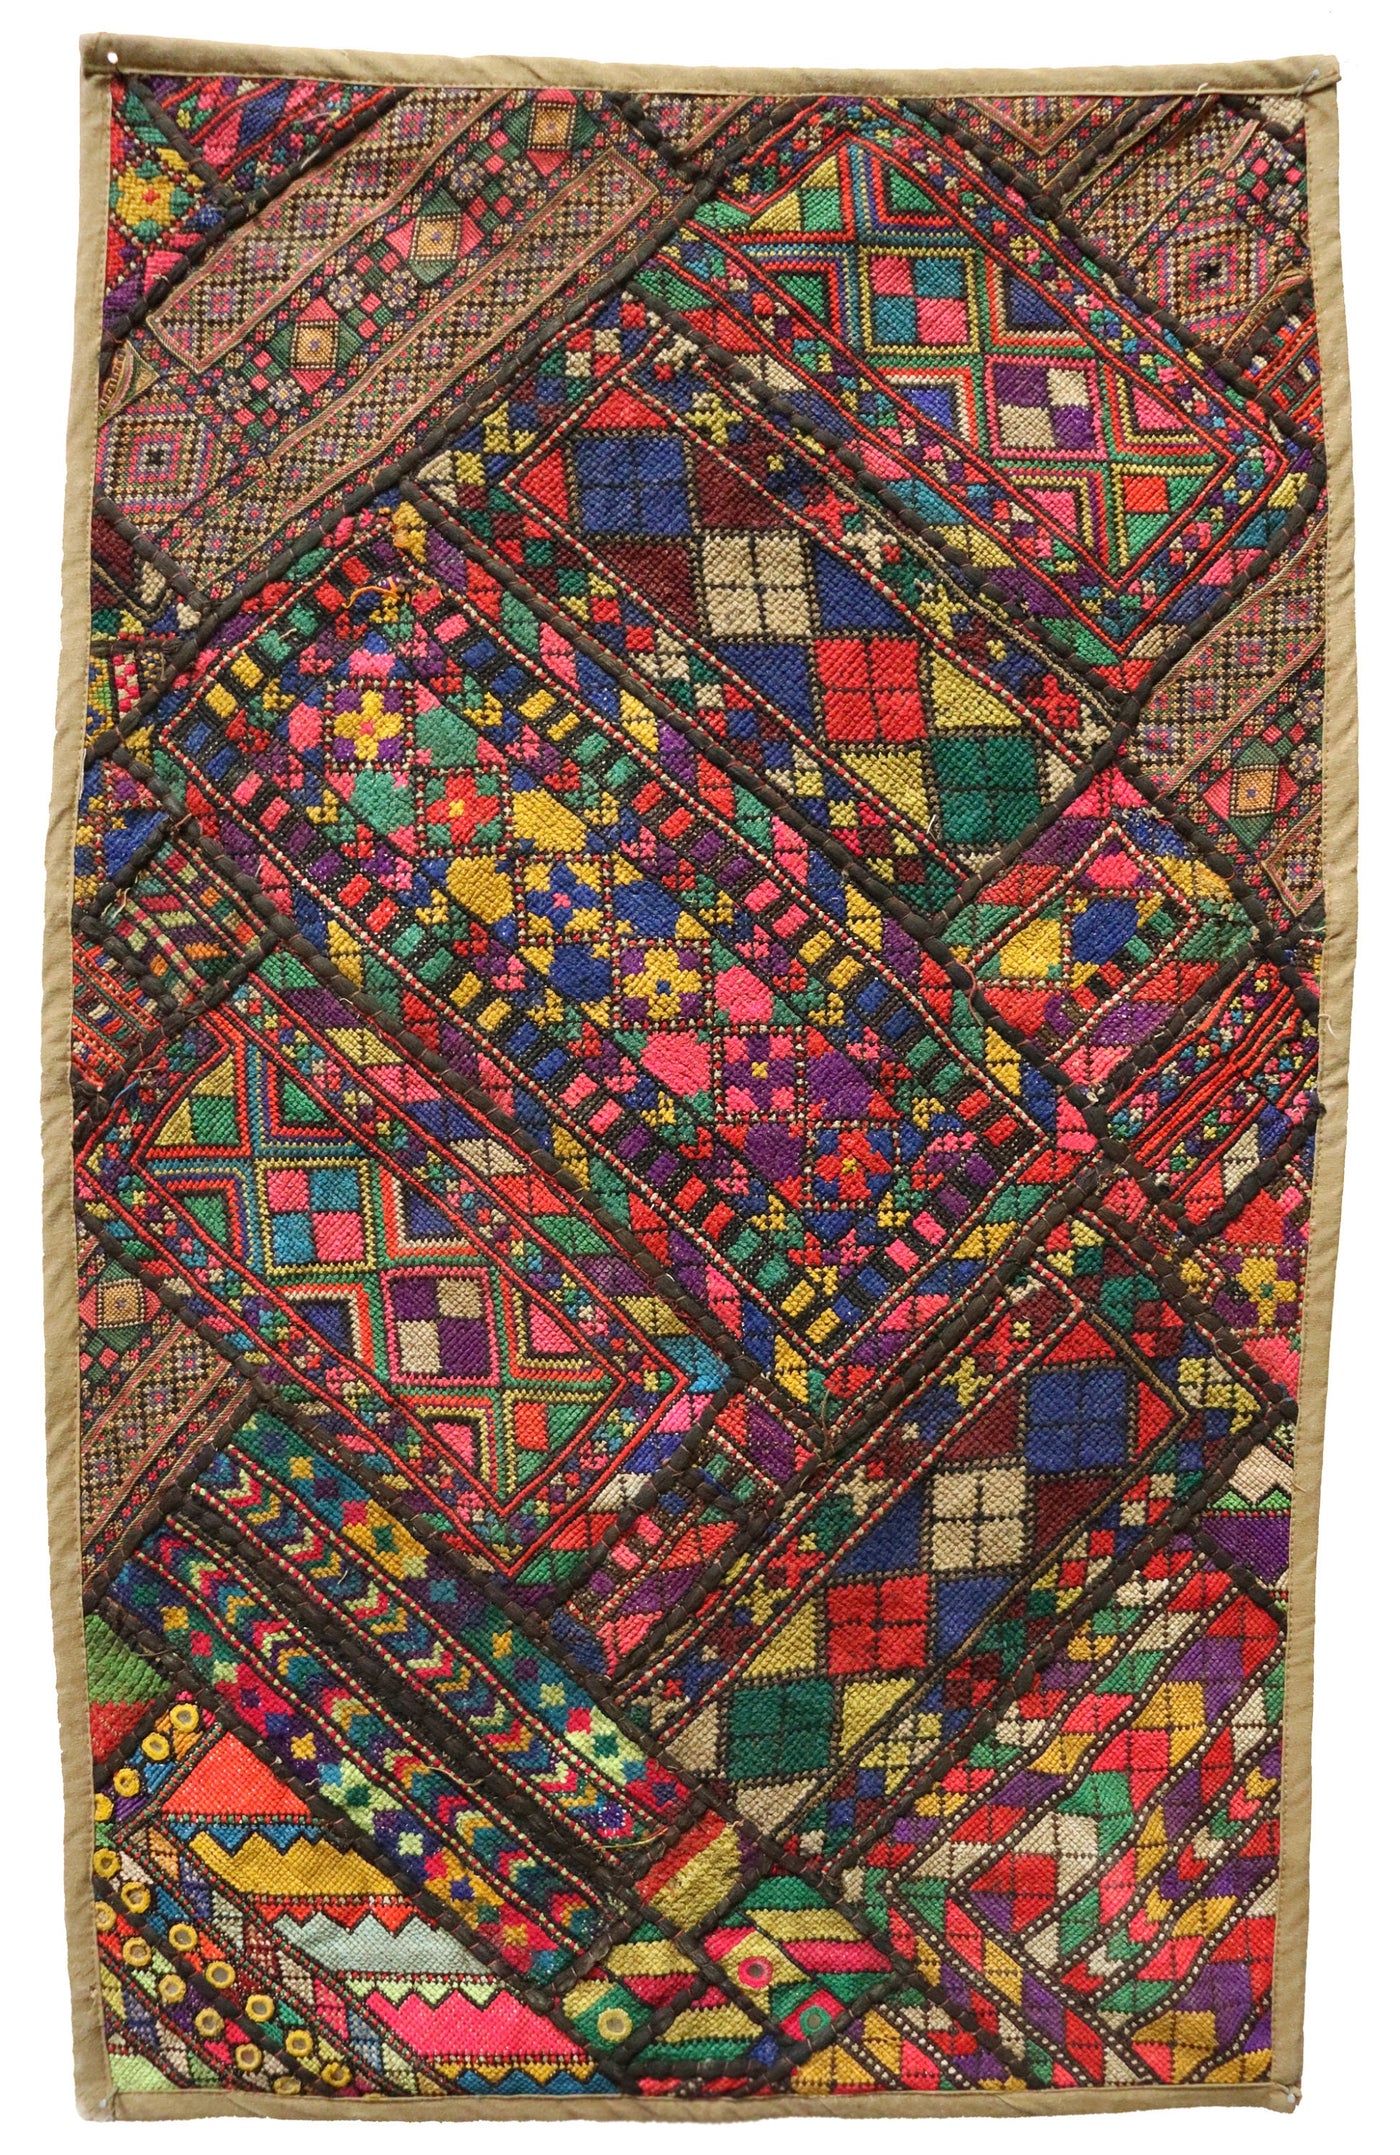 87x53 cm Vintage Bohemian handgefertigte orientalische Patchwork Wandbehang Wandteppich Teppich  Nr:28/41 Wandbehang Orientsbazar   